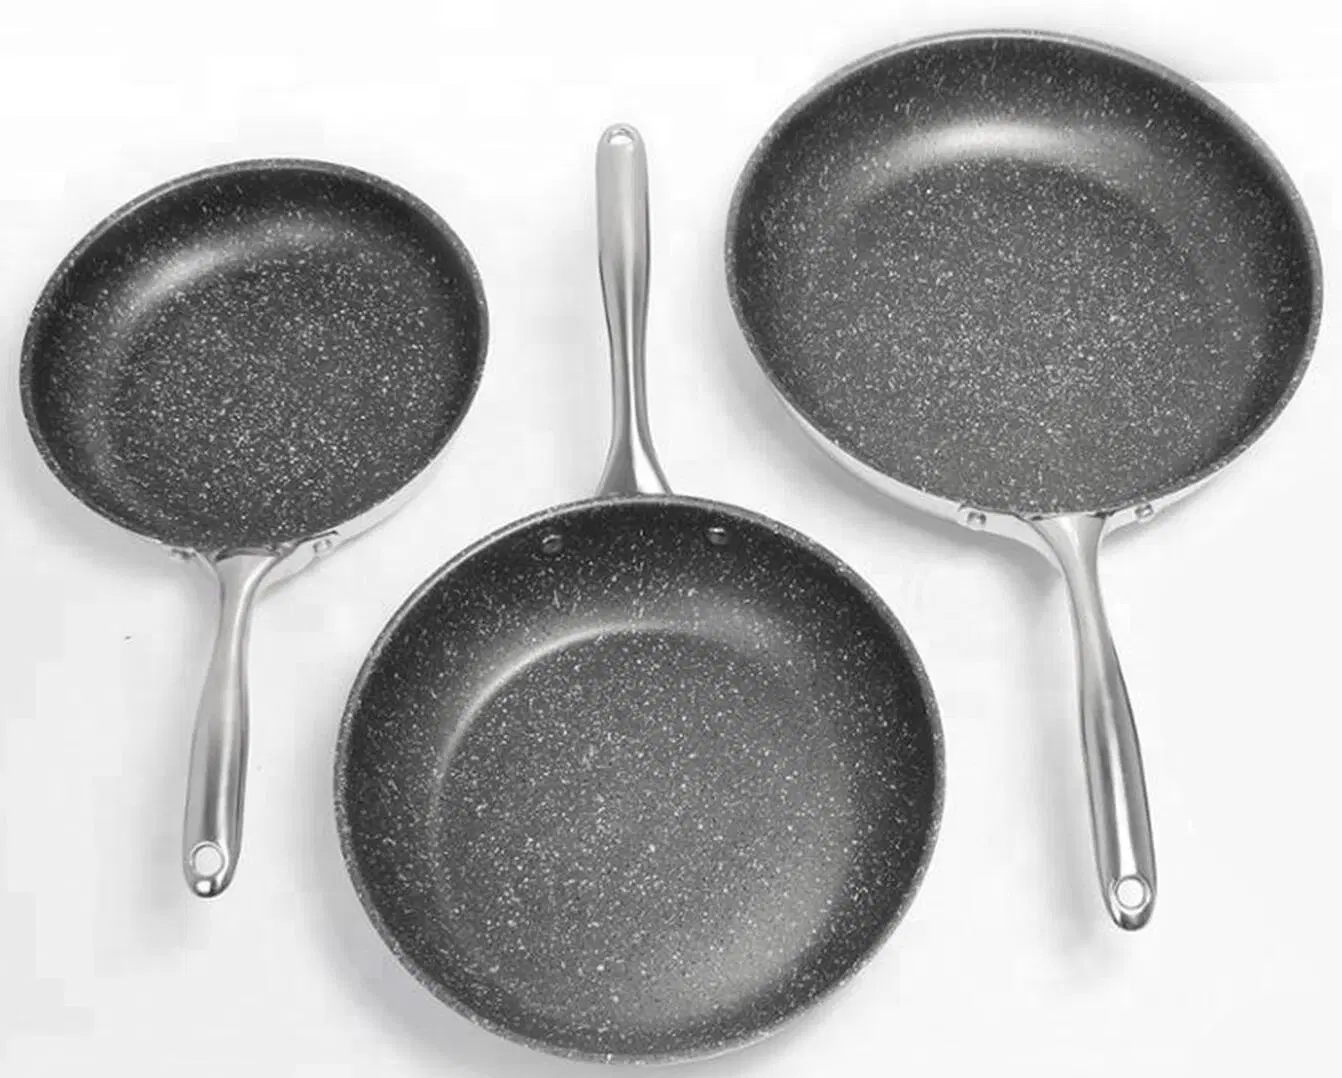 Kitchen Stainless Steel Non Stick Wok Pan Baking Pans 3PCS Cookware Sets Stainless Steel Frypan Multi Stir Skillet